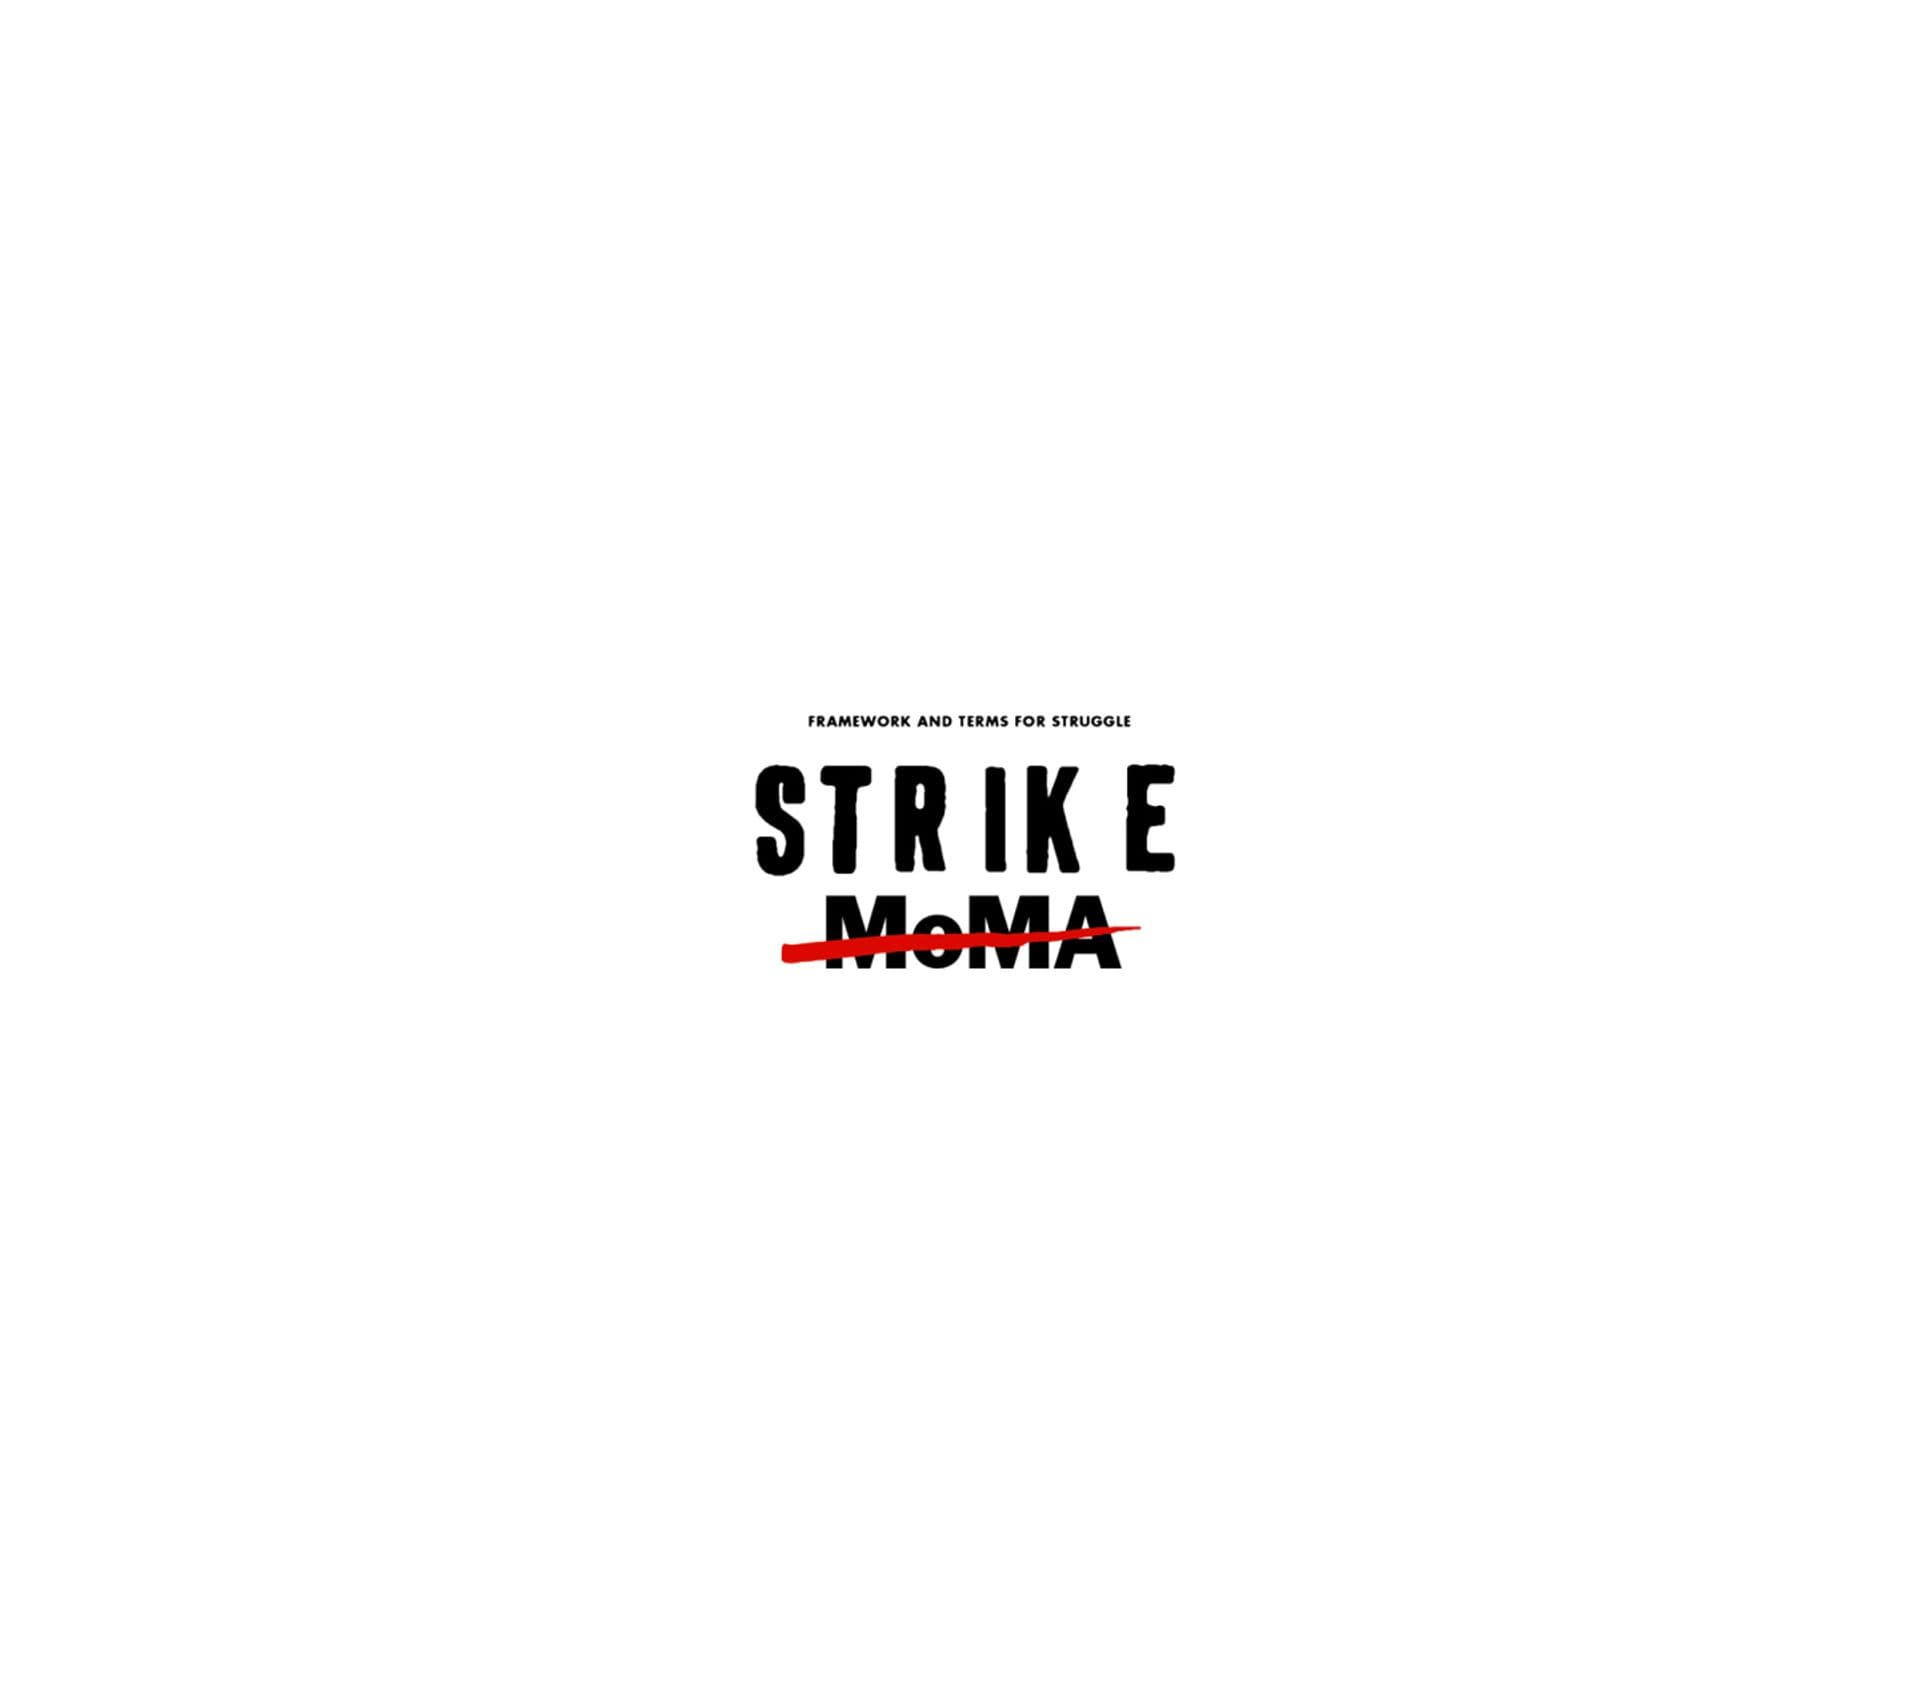 "Framework and Terms for Struggle, STRIKE MOMA", Courtesy of StrikeMoMA.